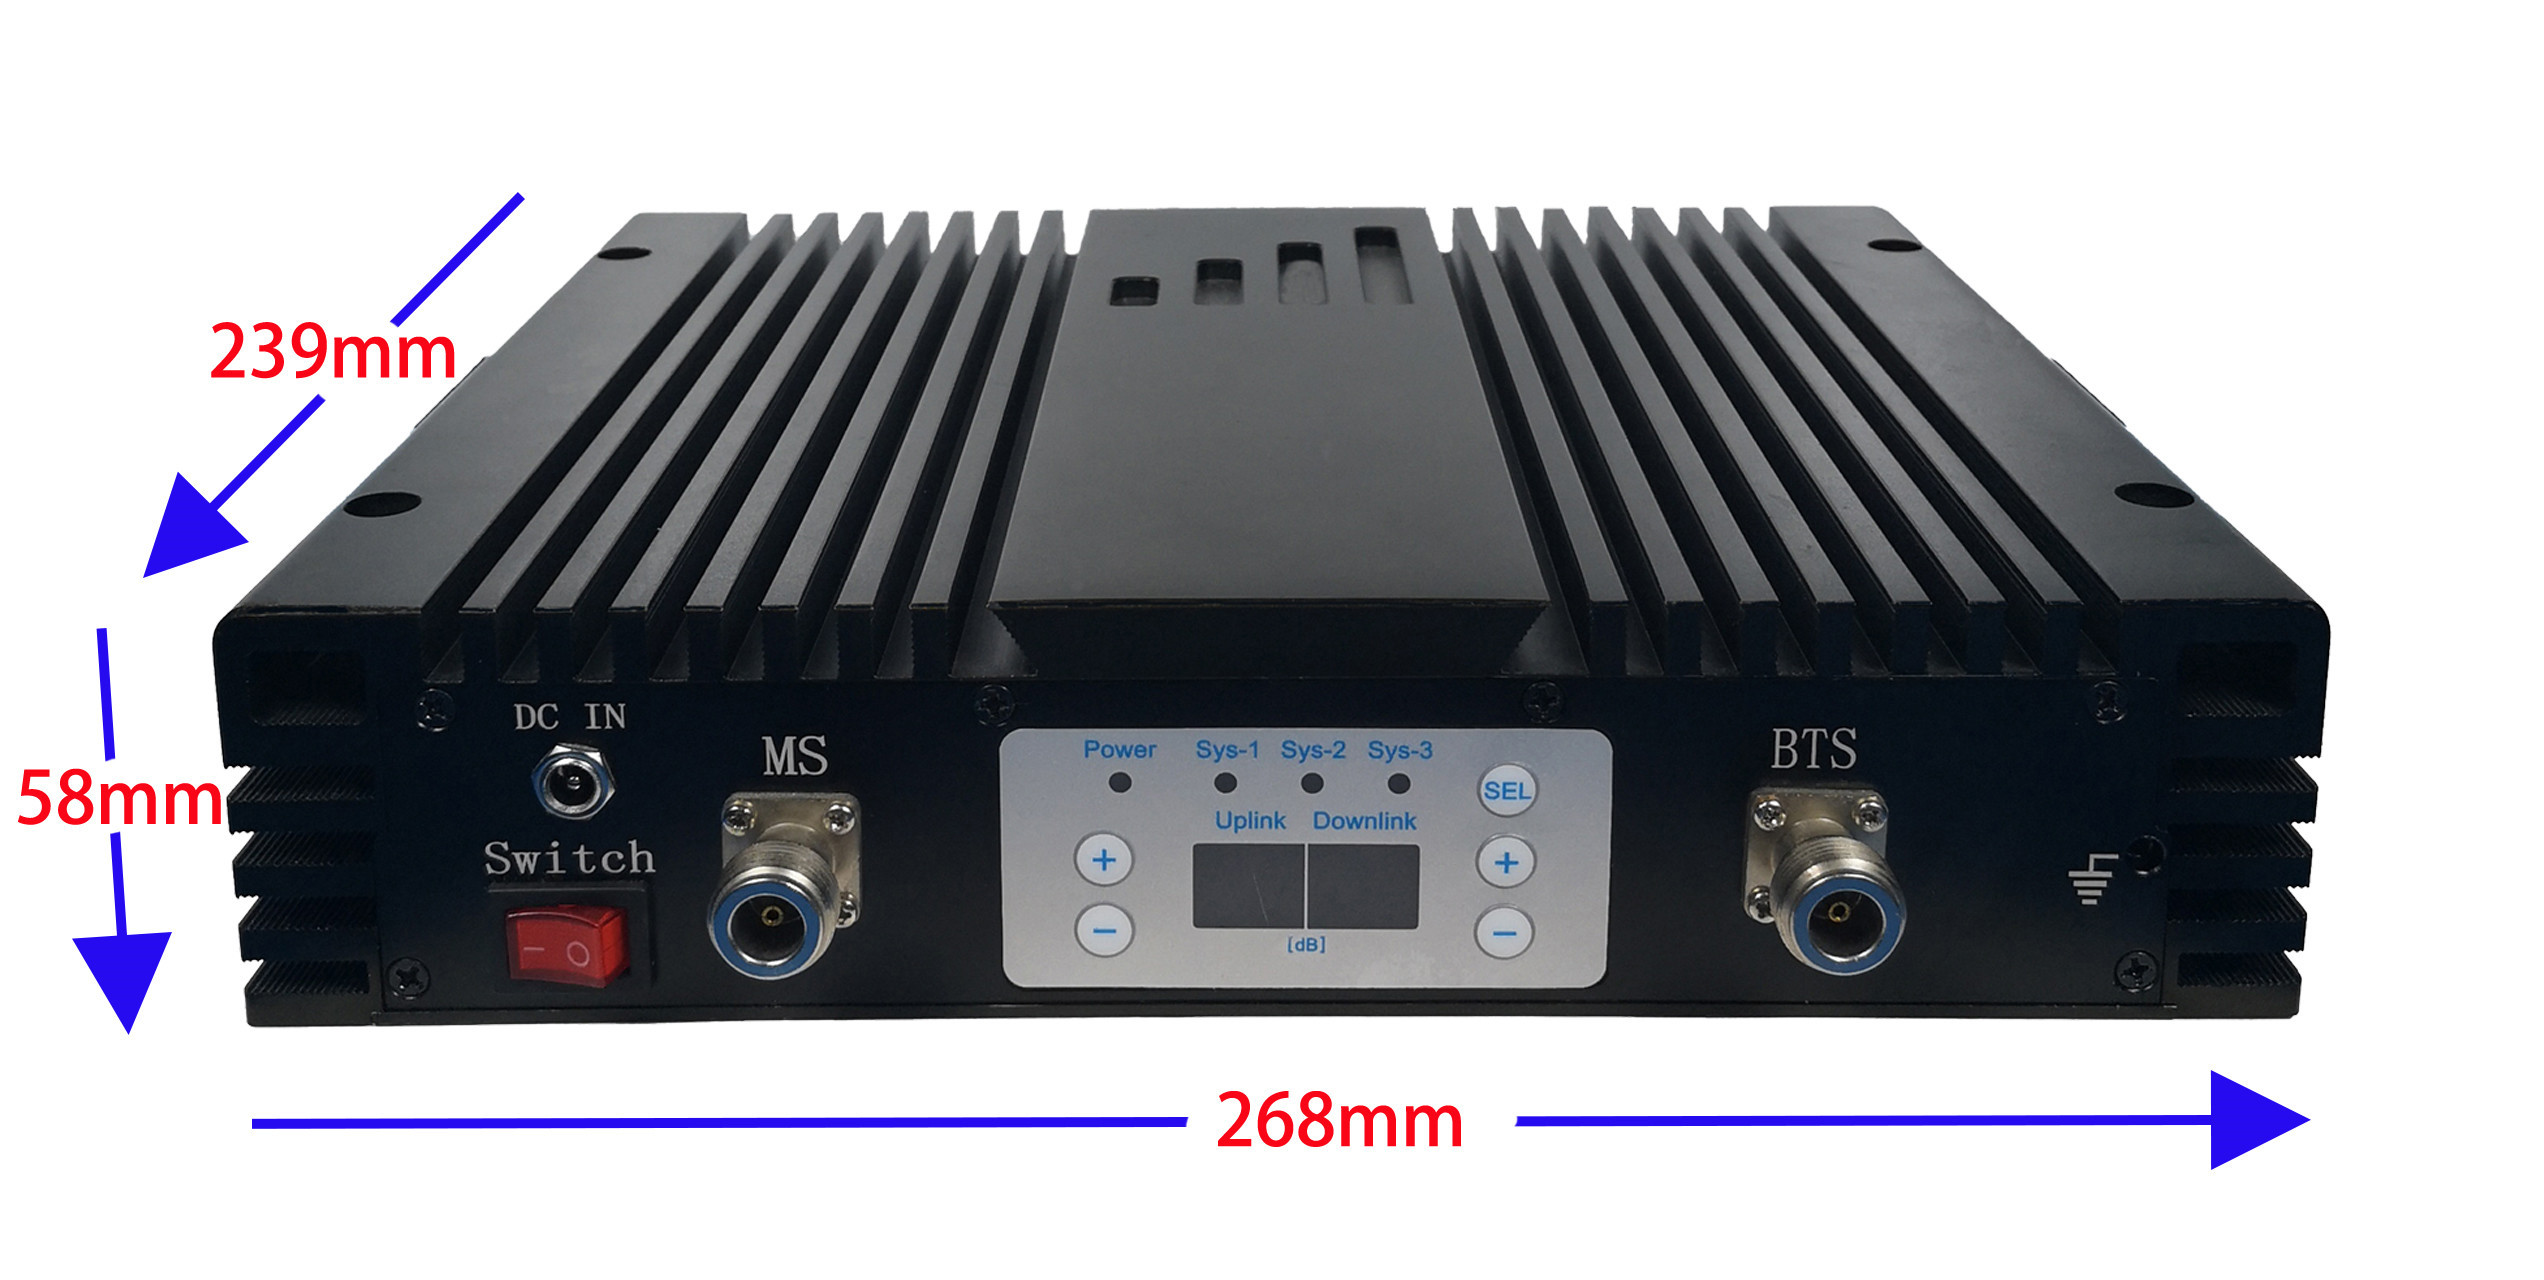 Amplificador de señal móvil ajustable 1900MHz PCS1900 30dB ALC